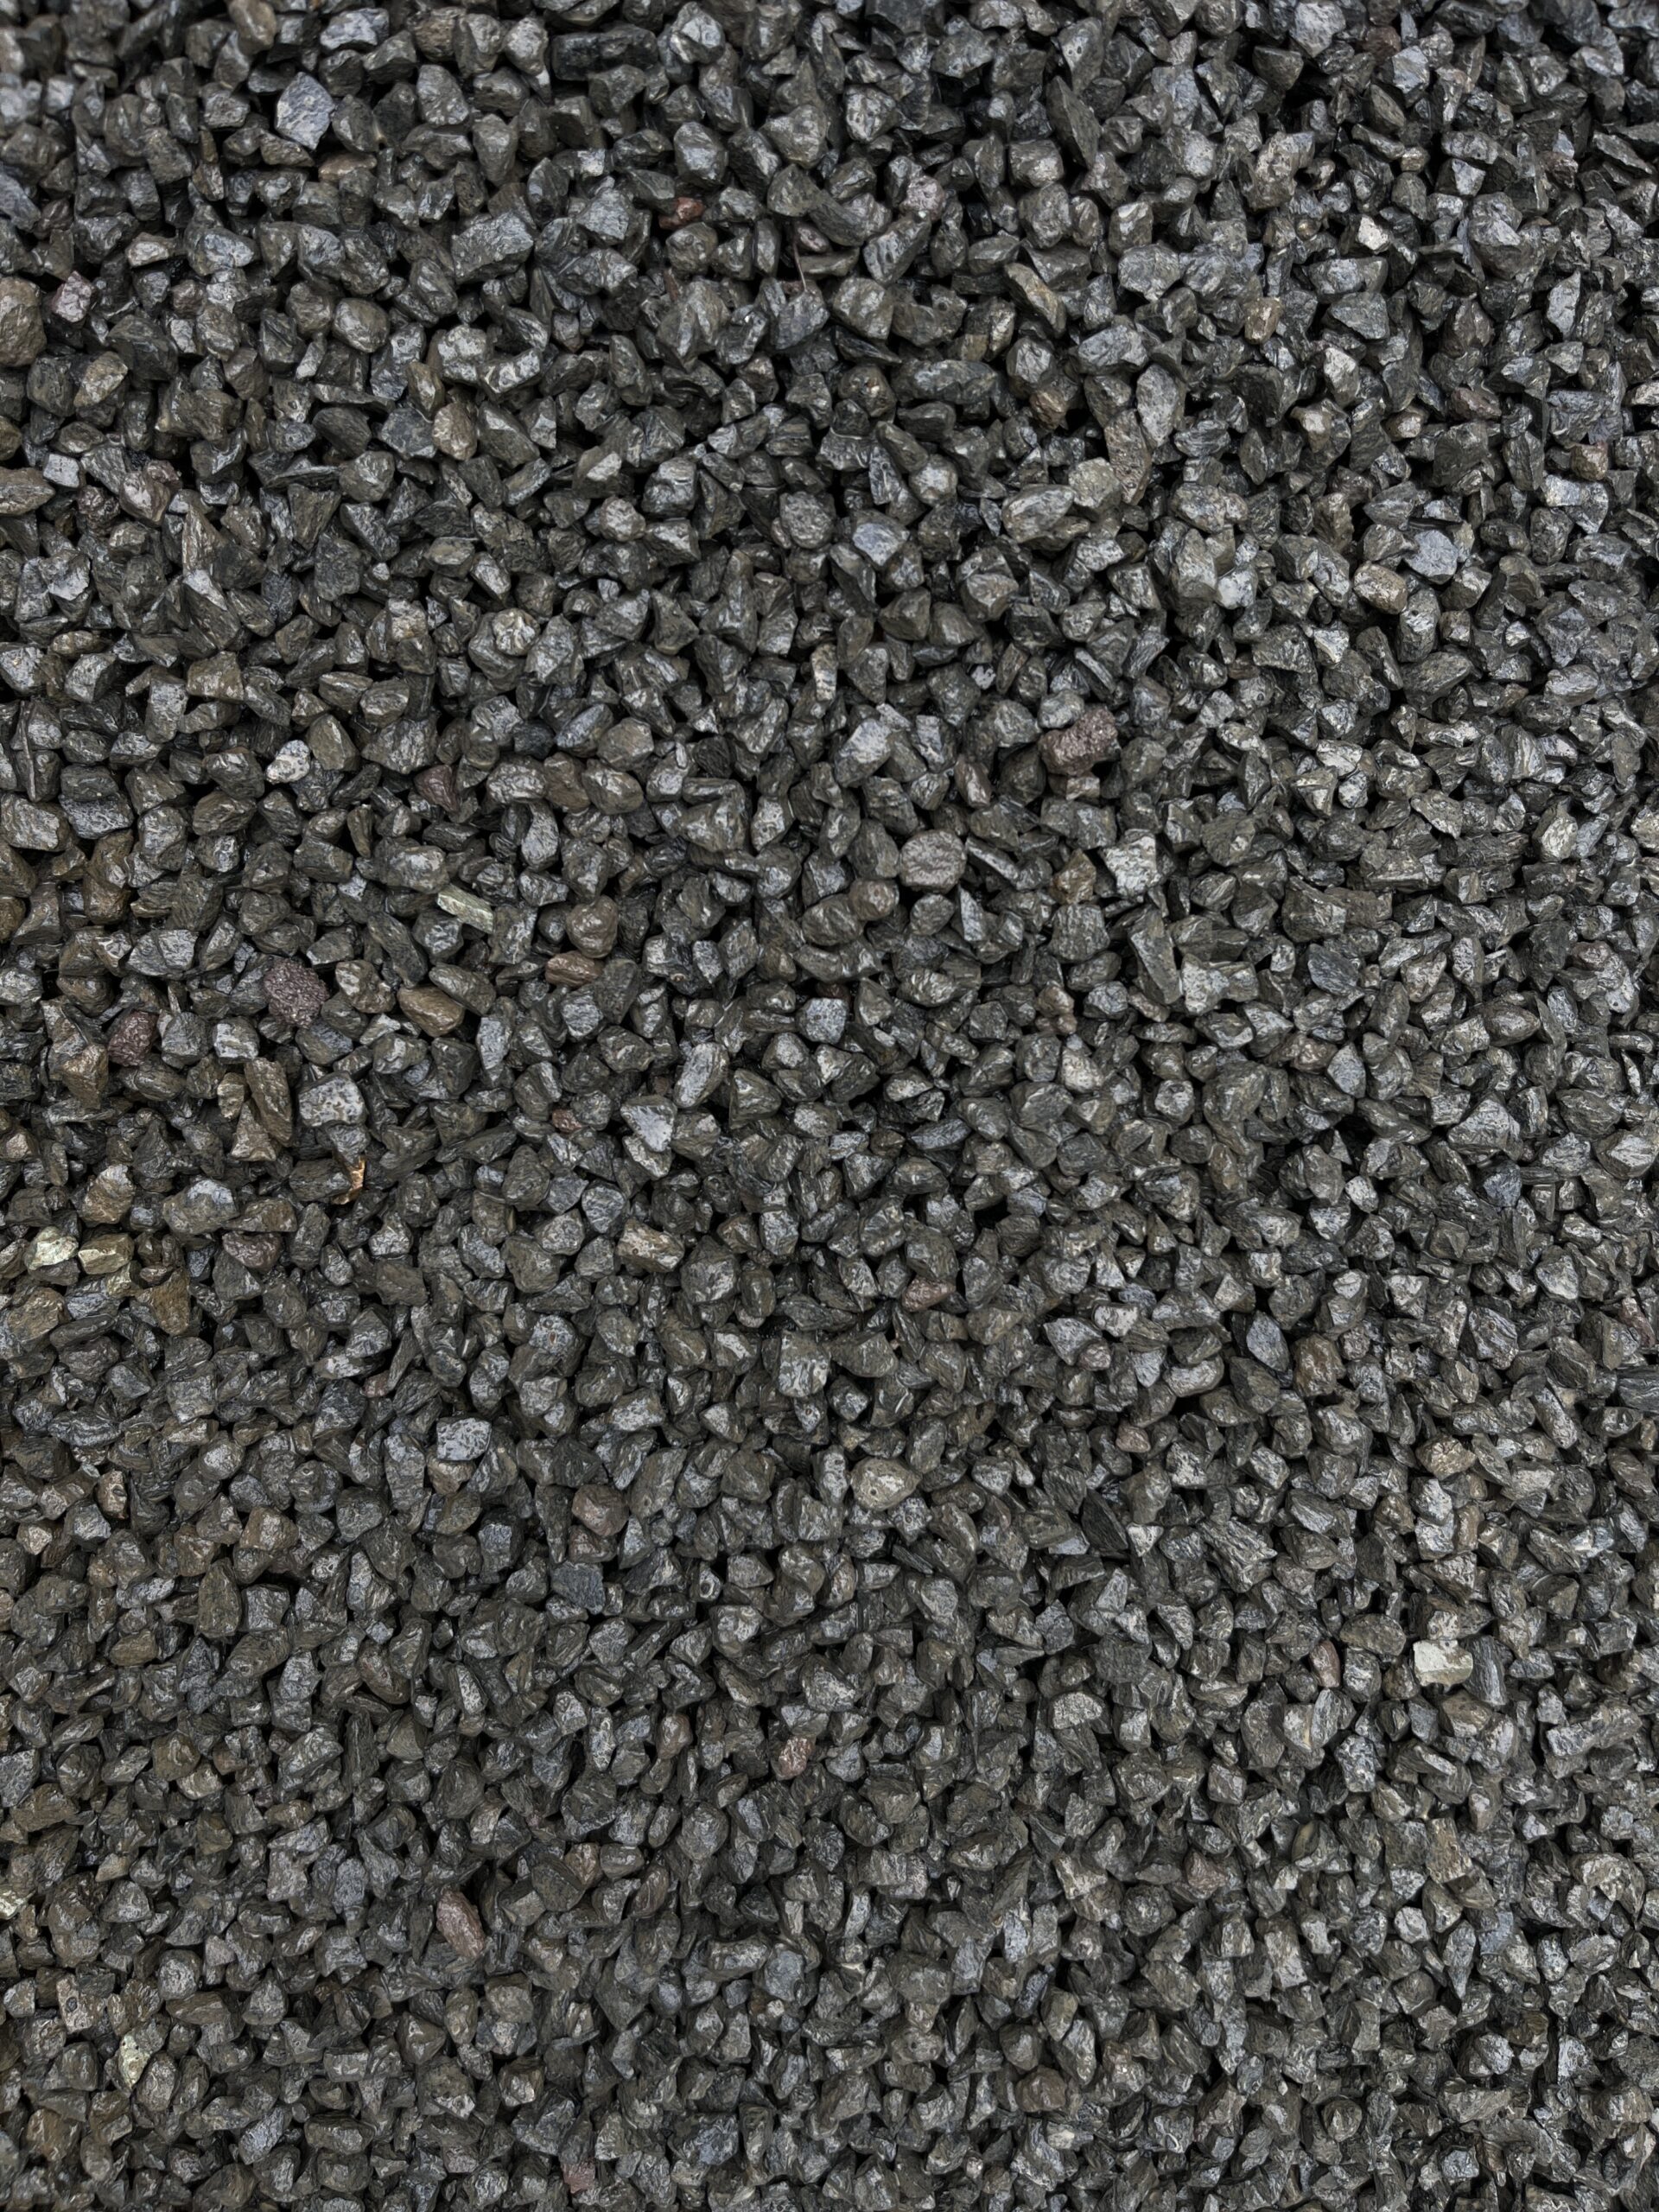 Drainage Gravel Blue Stone 10mm - $99/m3